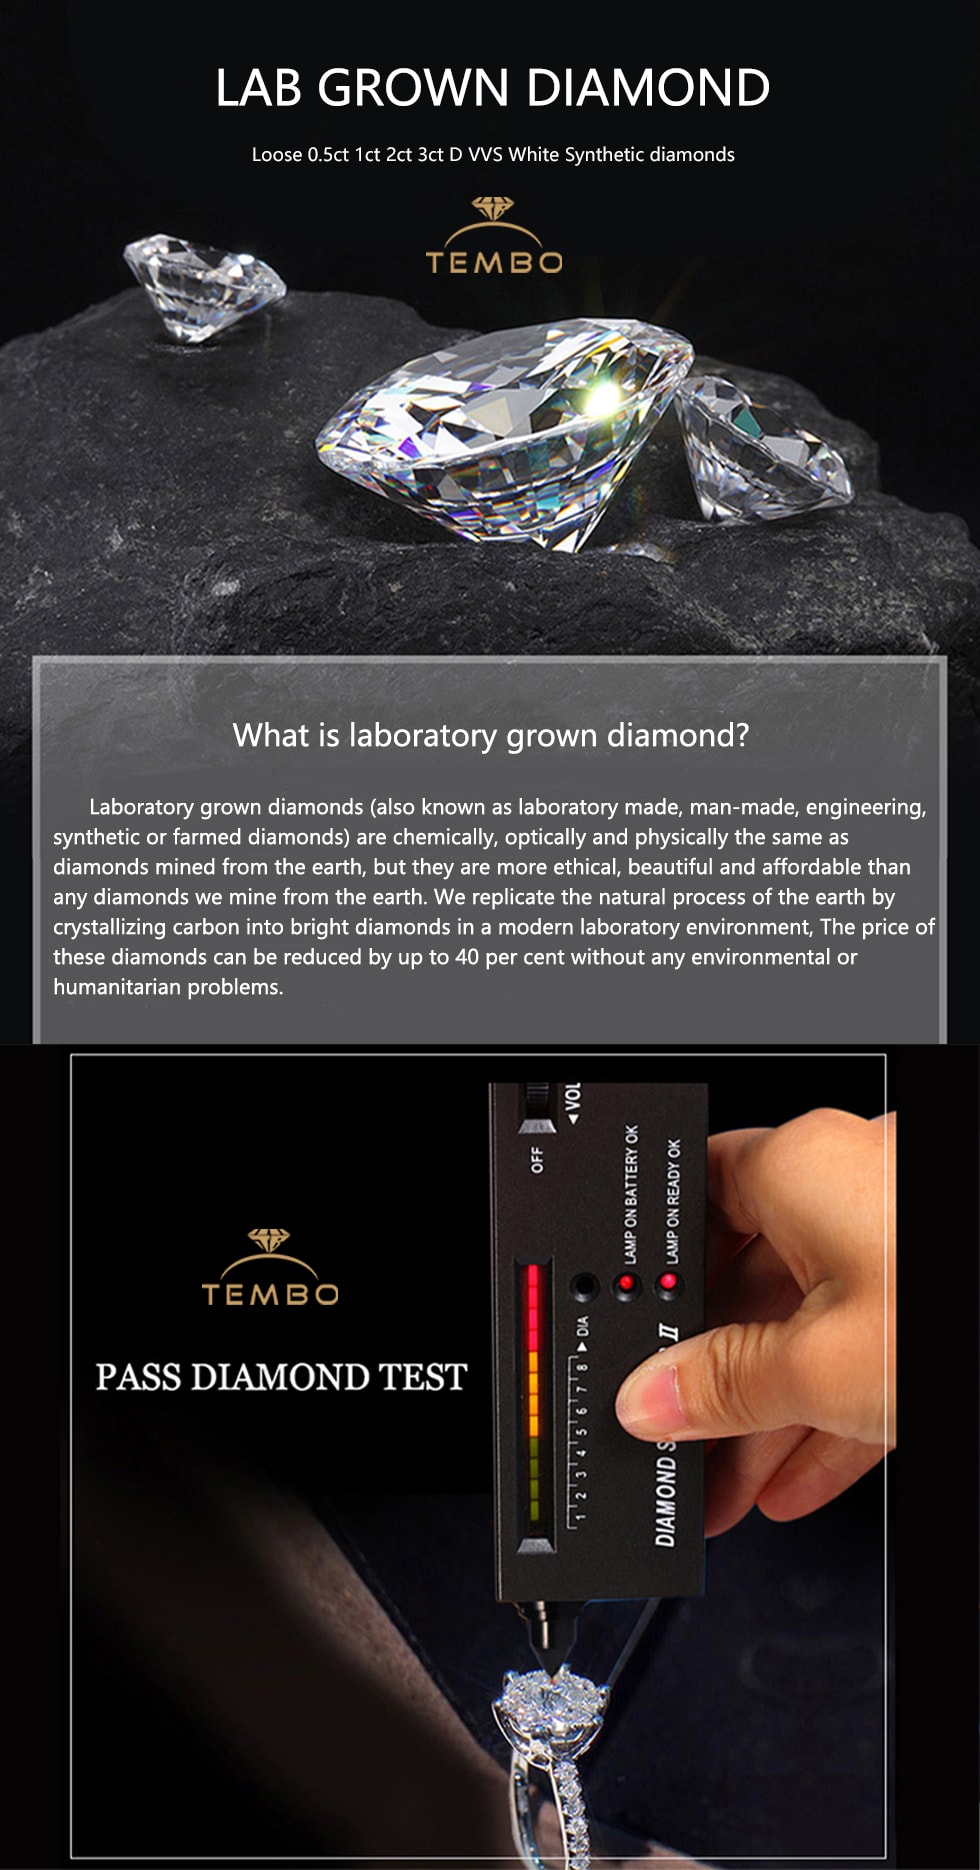 What is laboratory grown diamond?